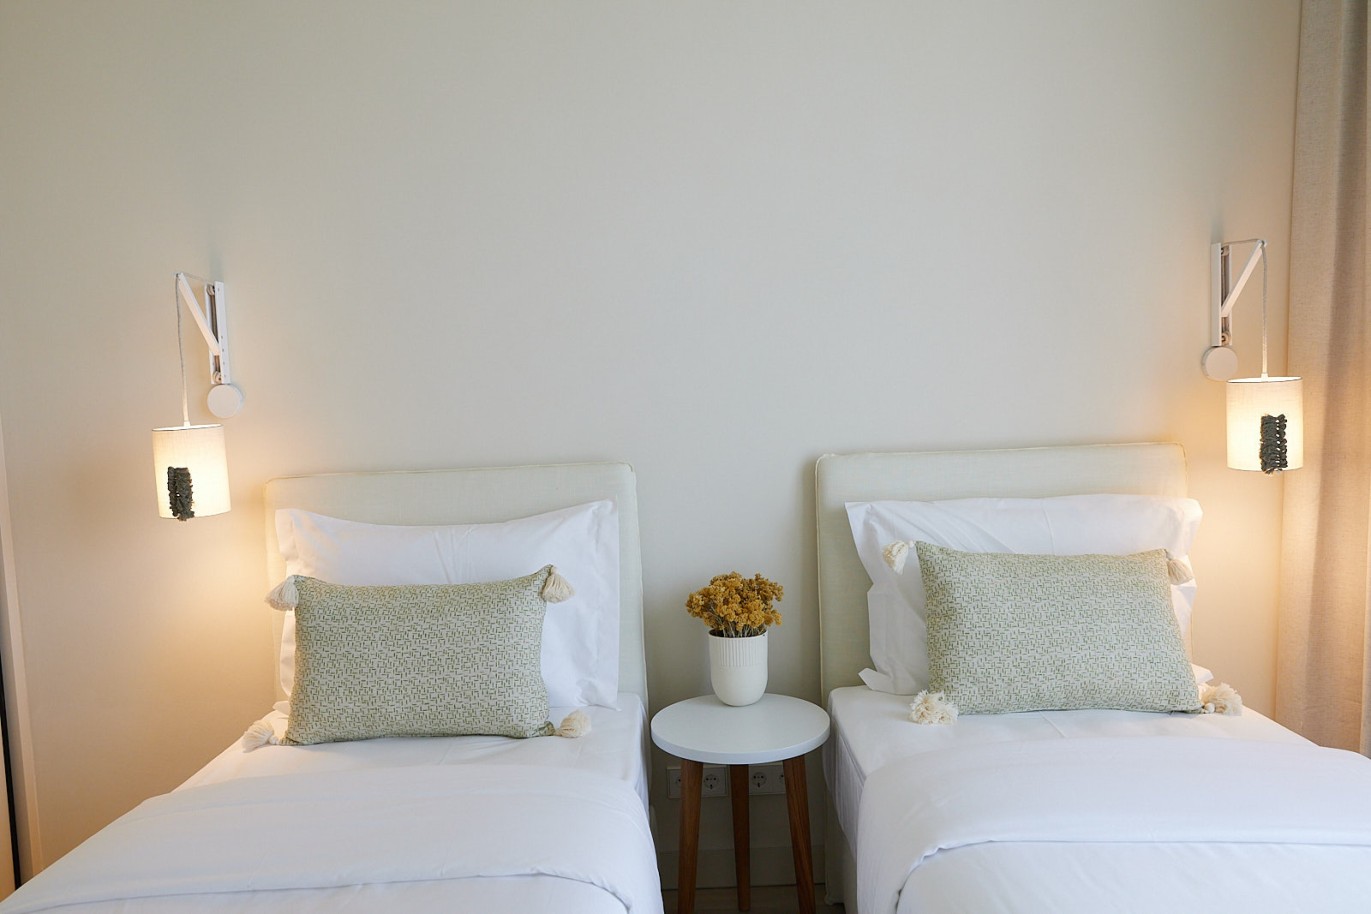 2 bedroom apartment in resort, for sale in Porches, Algarve_229103